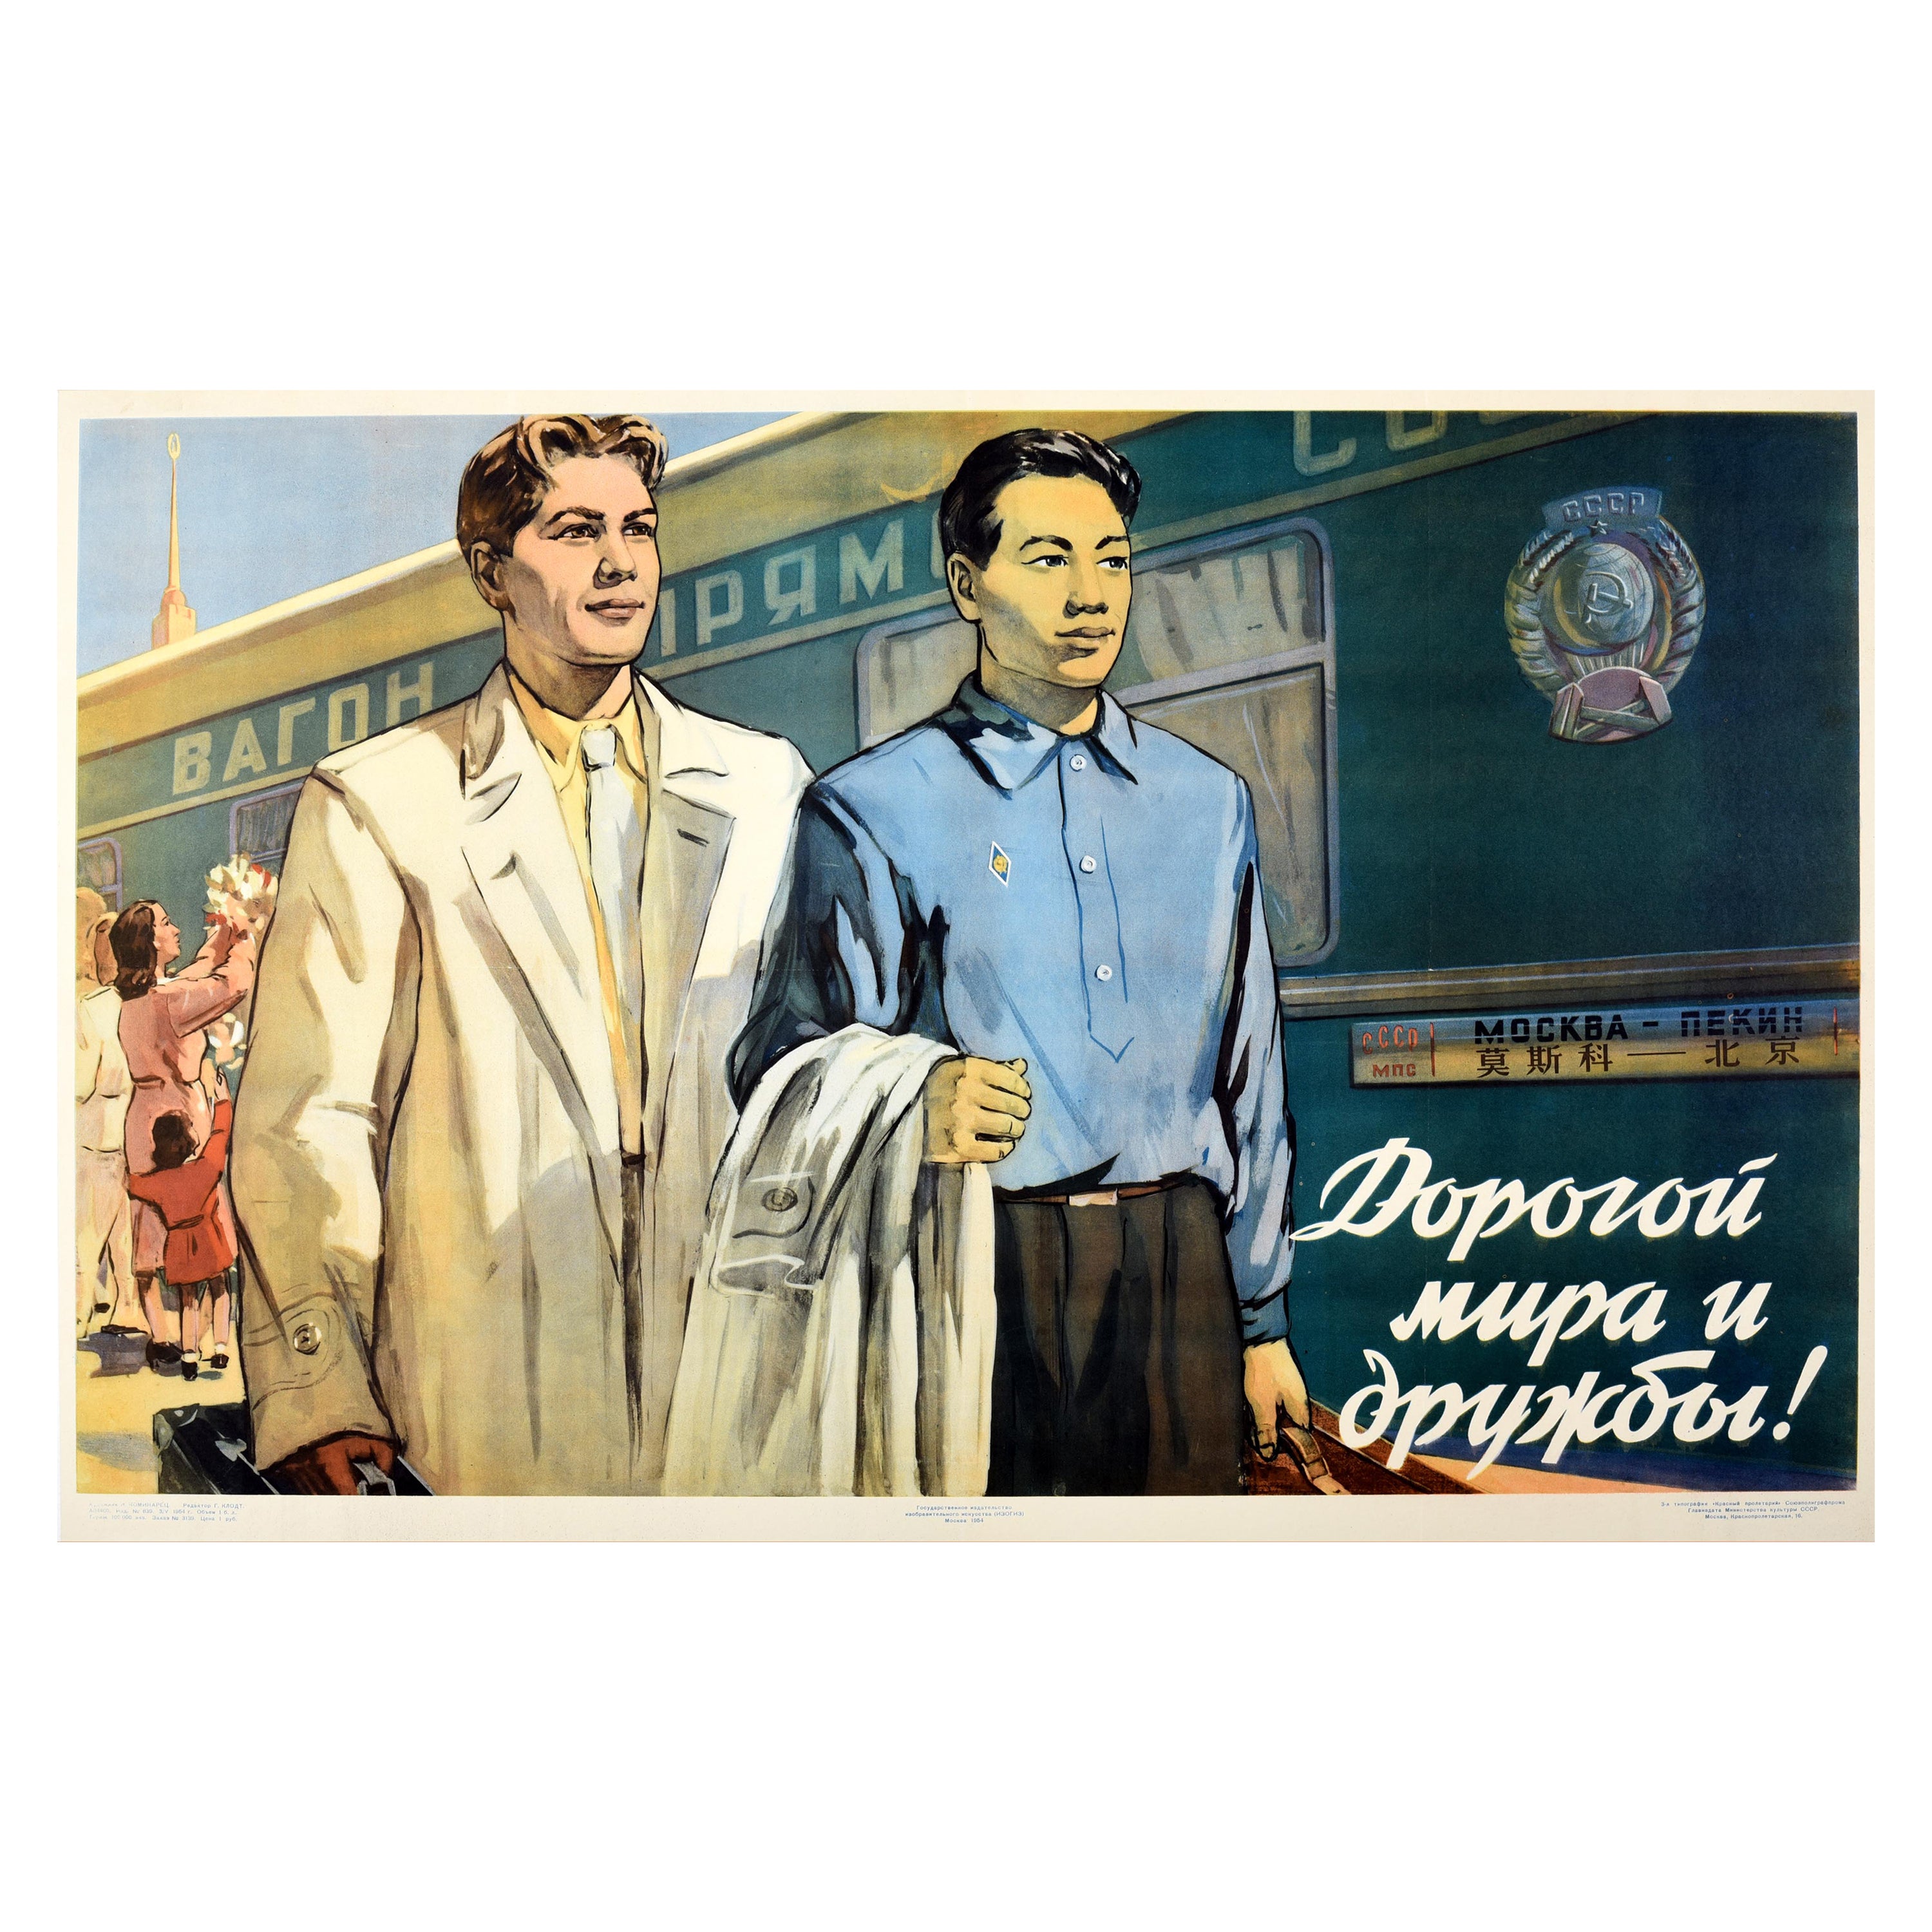 Originales sowjetisches Propagandaplakat Moskau Peking UdSSR China Freundschaft